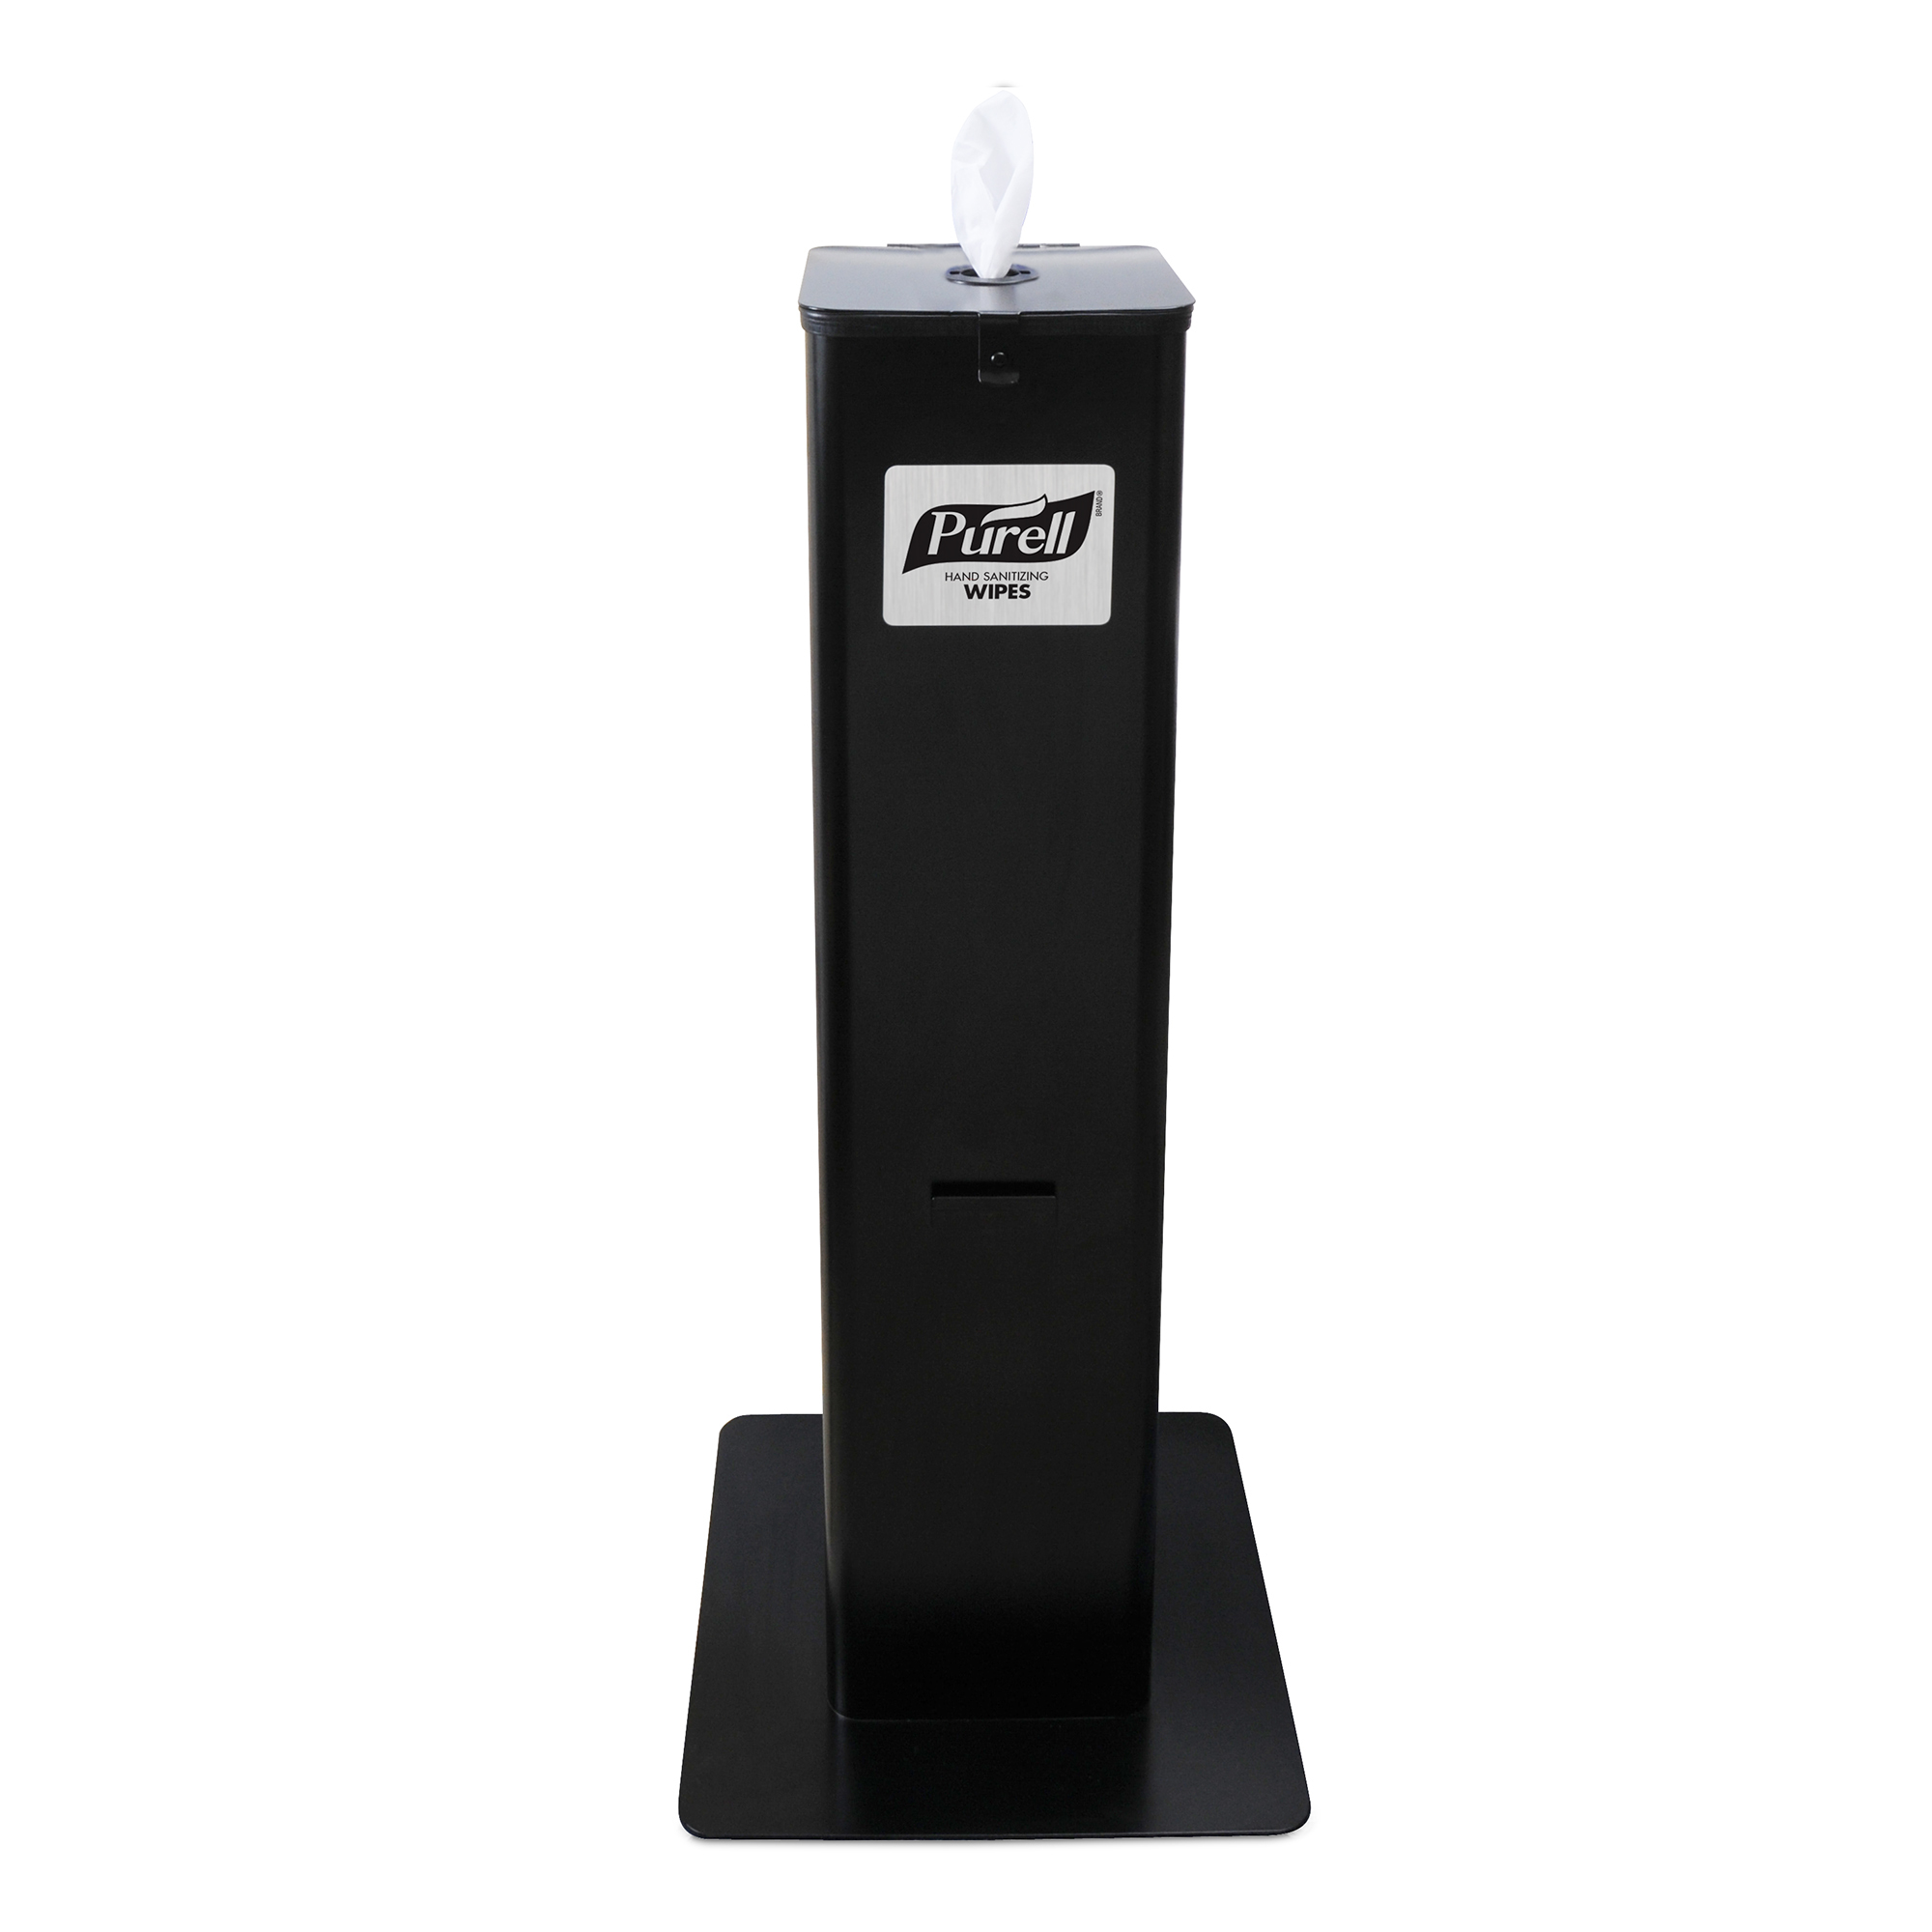 PURELL® Hand Sanitizing Wipes High Capacity Floor Stand Dispenser Black